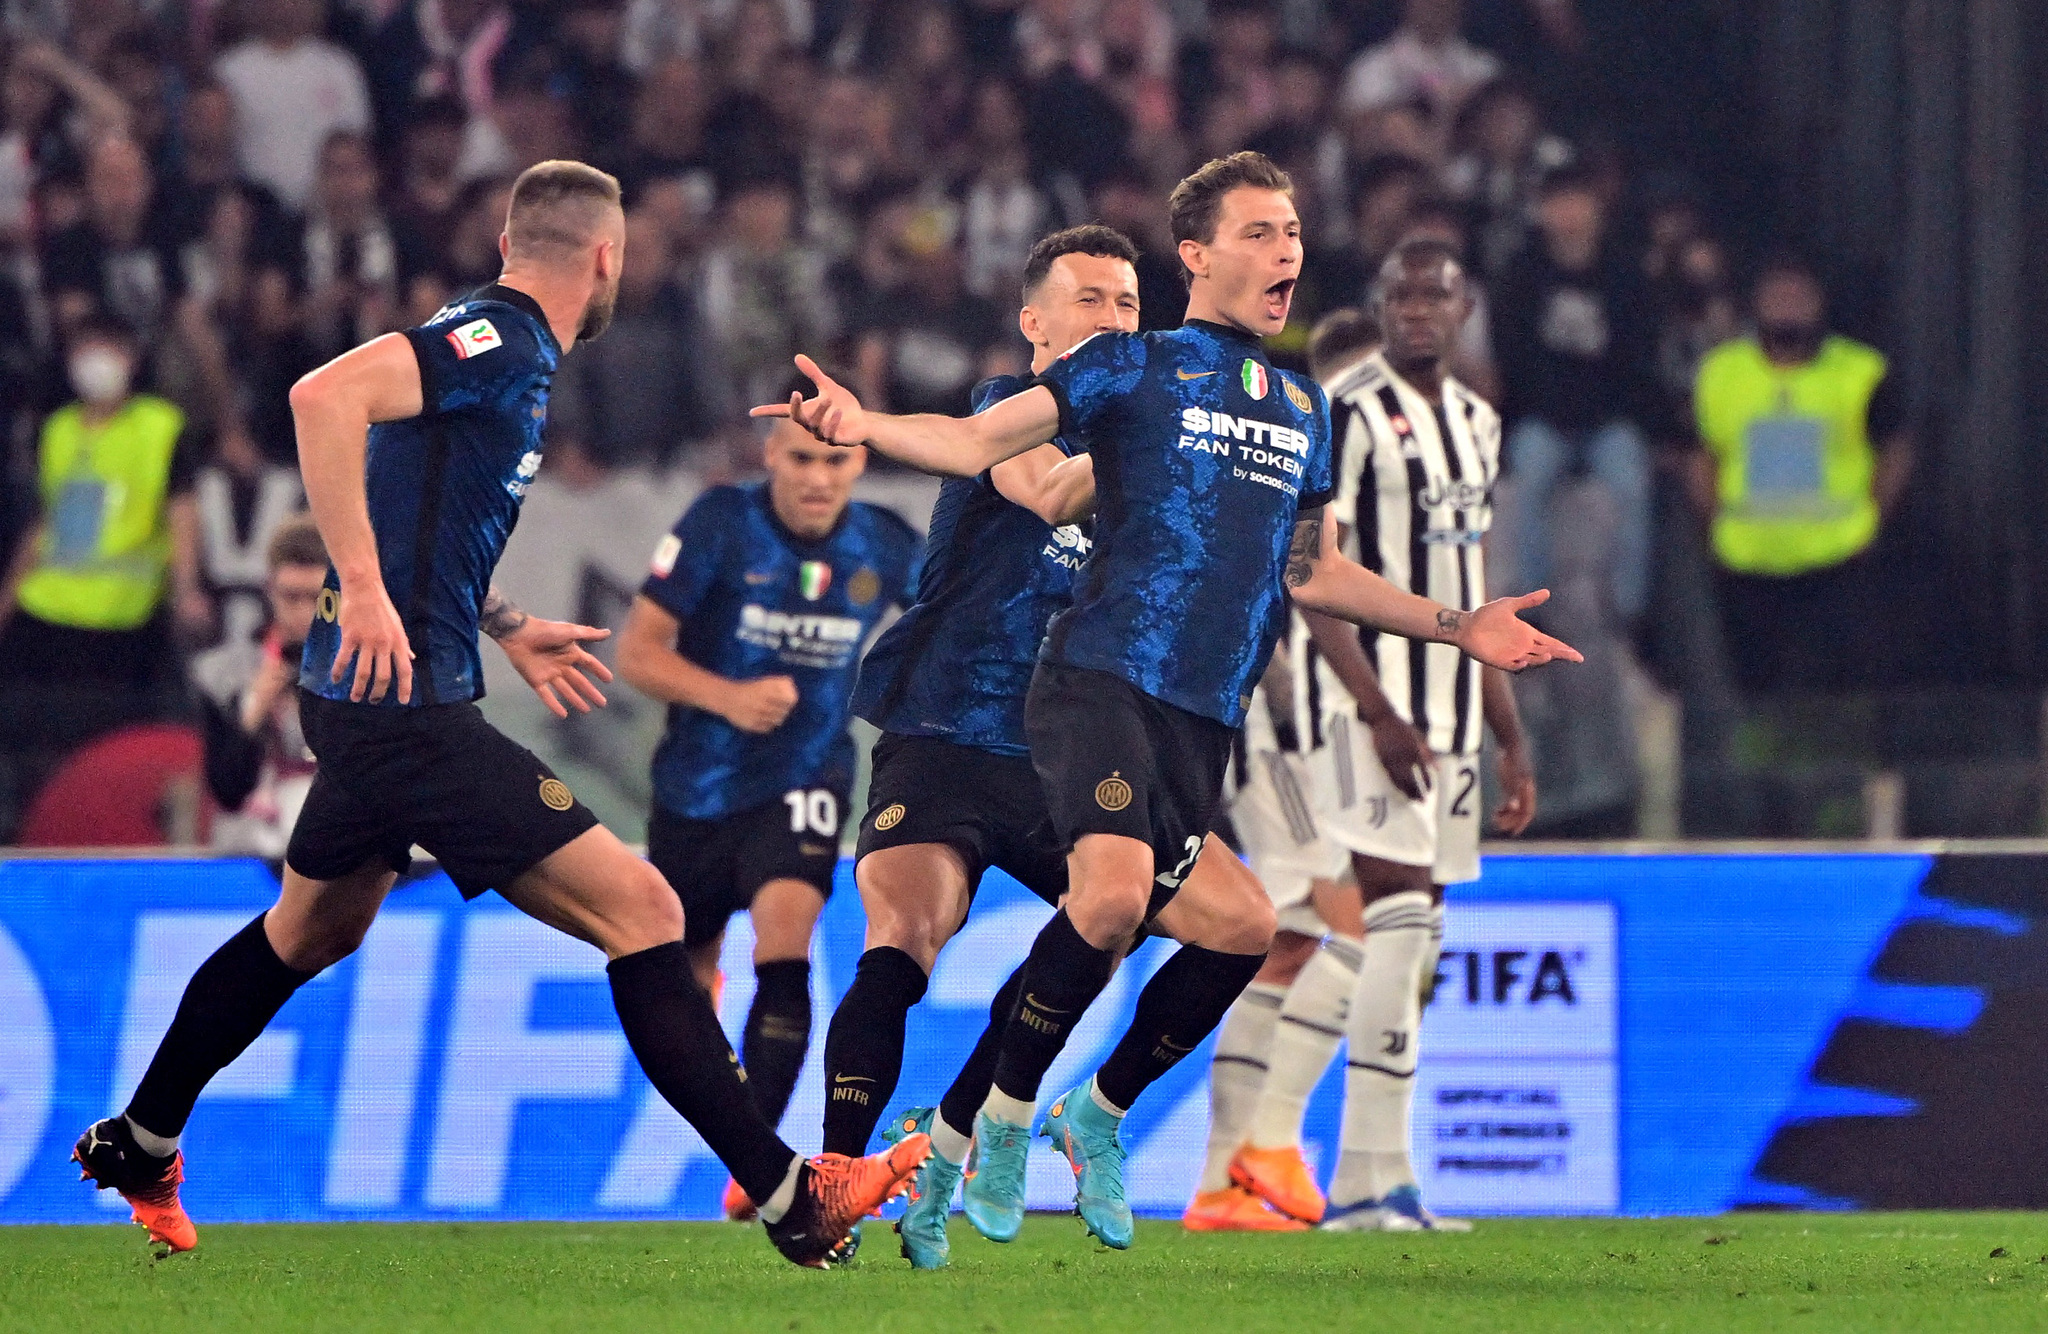 Next Gen battling display not enough in Serie C Coppa Italia Final -  Juventus